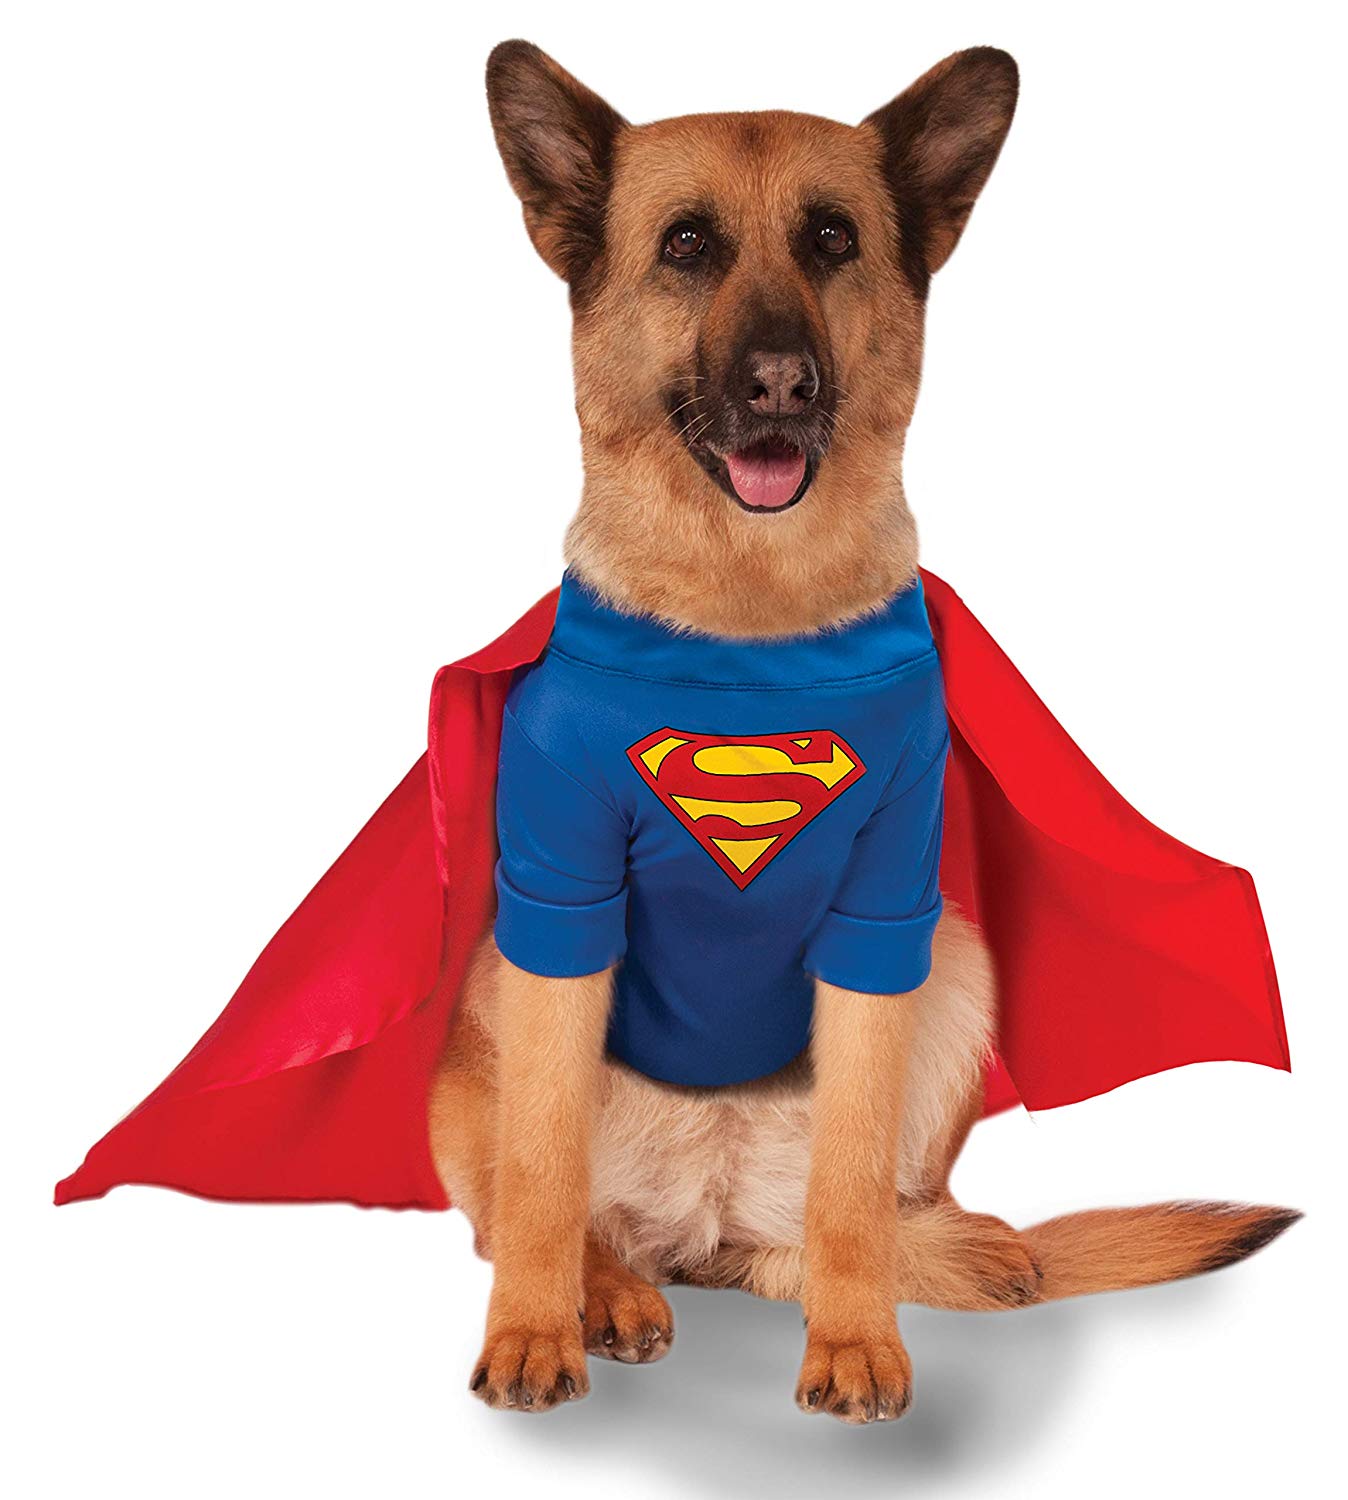 Corgi mixed with German Shepherd dog in Superman costume